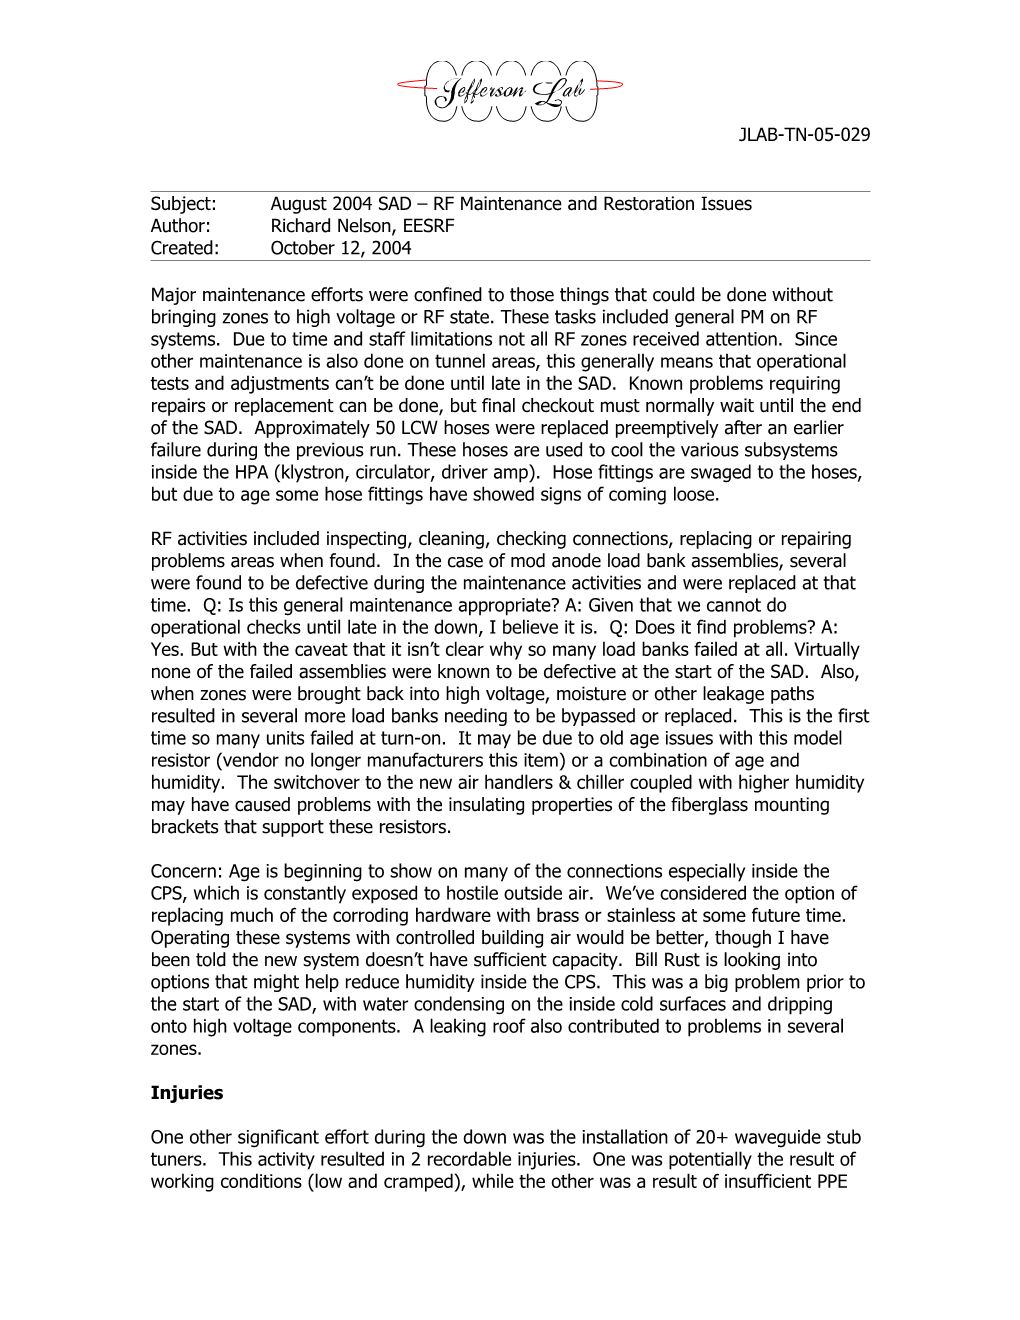 Subject:August 2004 SAD RF Maintenance and Restoration Issues